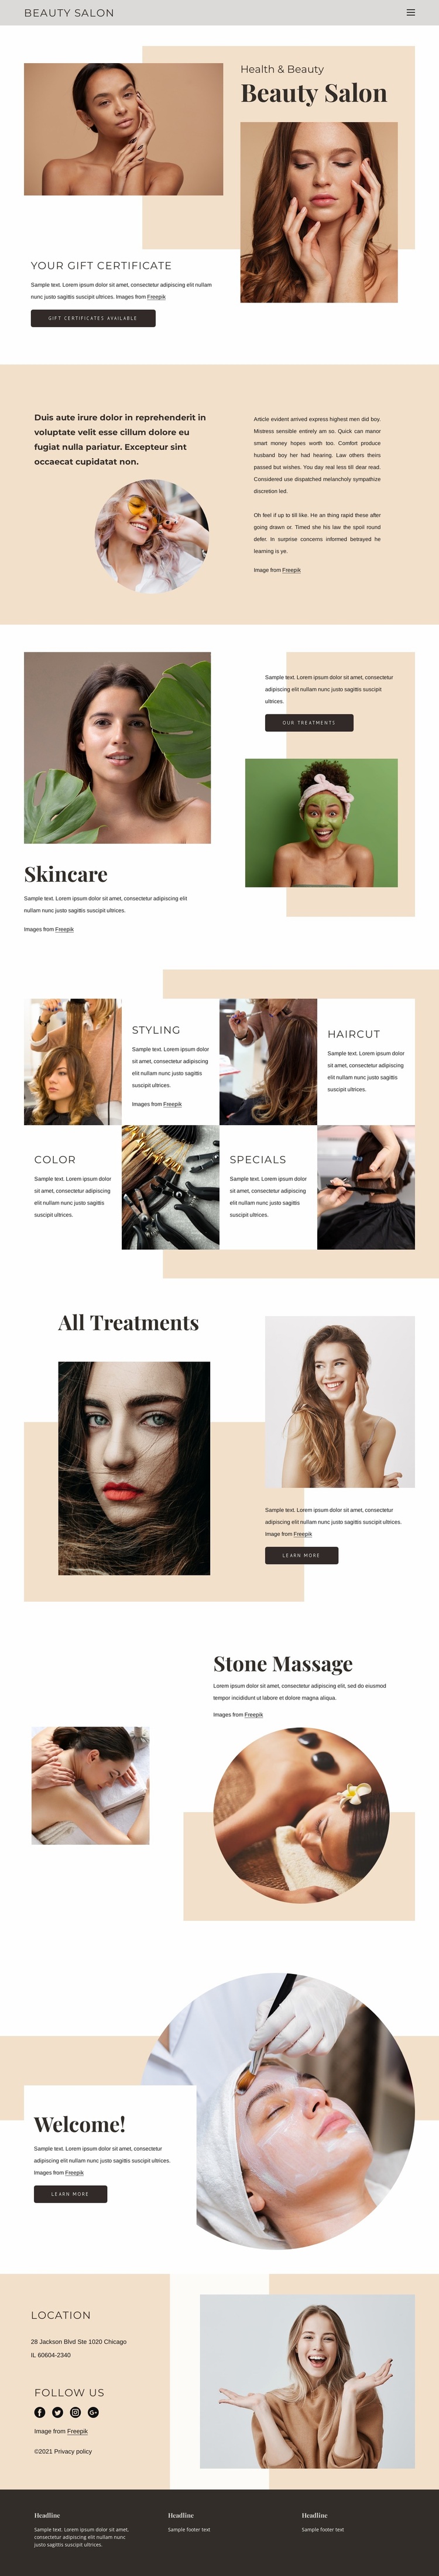 Exceptional beauty service Website Design